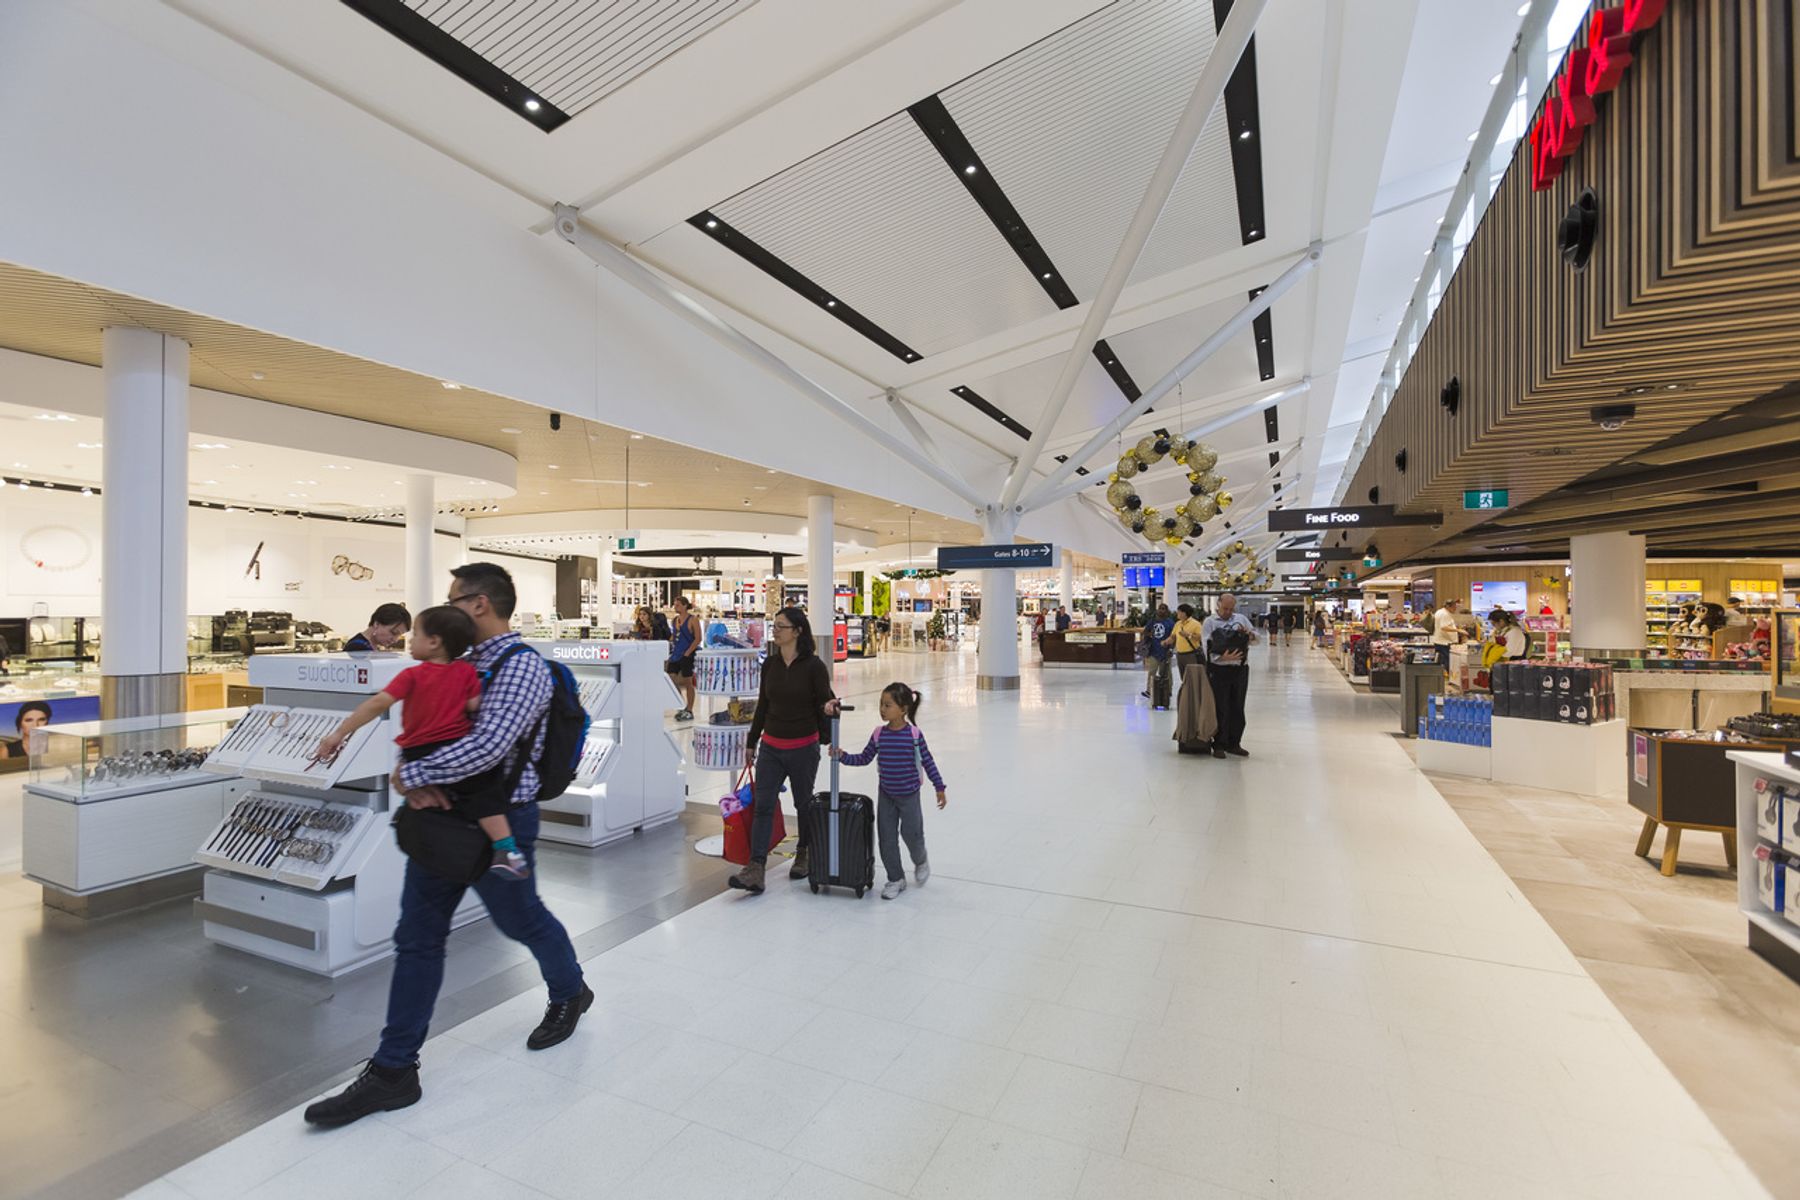 International Airport, Sydney. Progettazione illuminotecnica e dell’impianto elettrico: Aurecon Sydney, Sydney. Fotografia: Jackie Chan, Sydney.